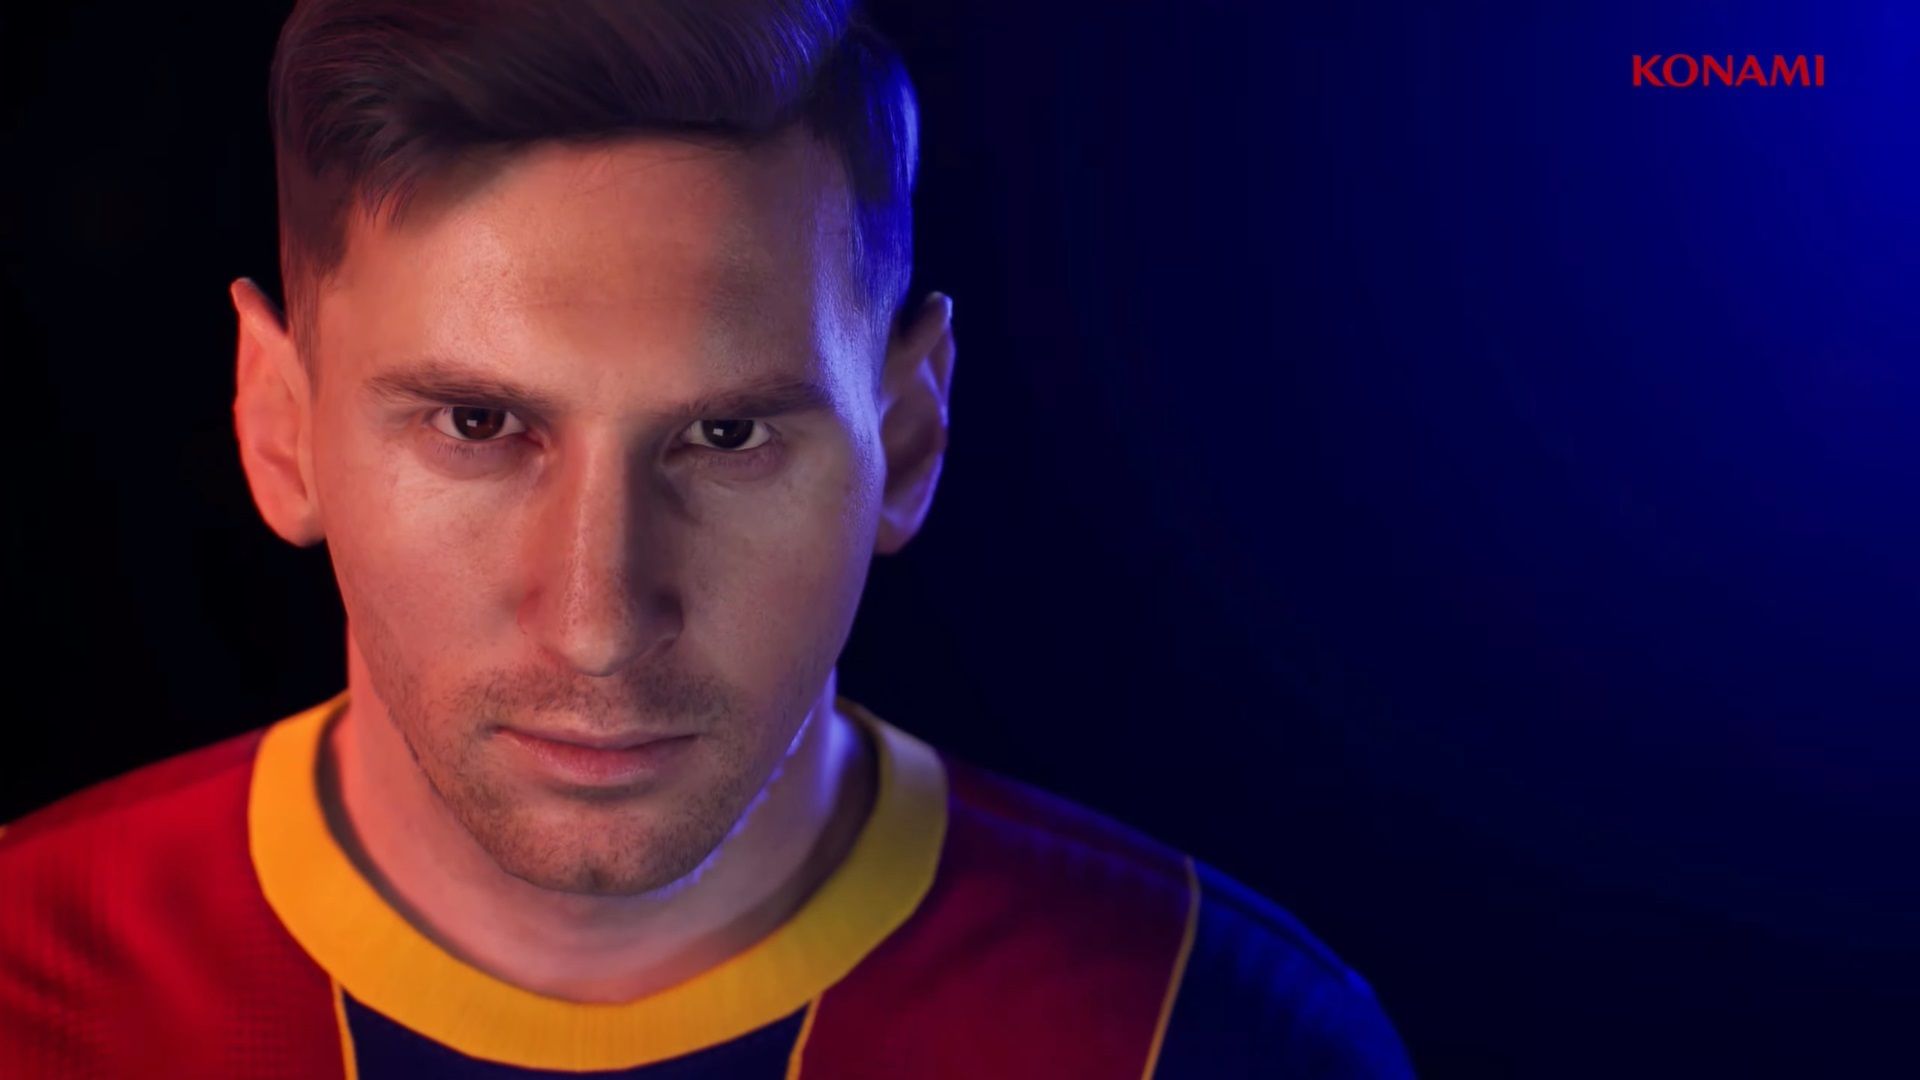 Konami won't talk about Messi leaving FC Barcelona PES 2021